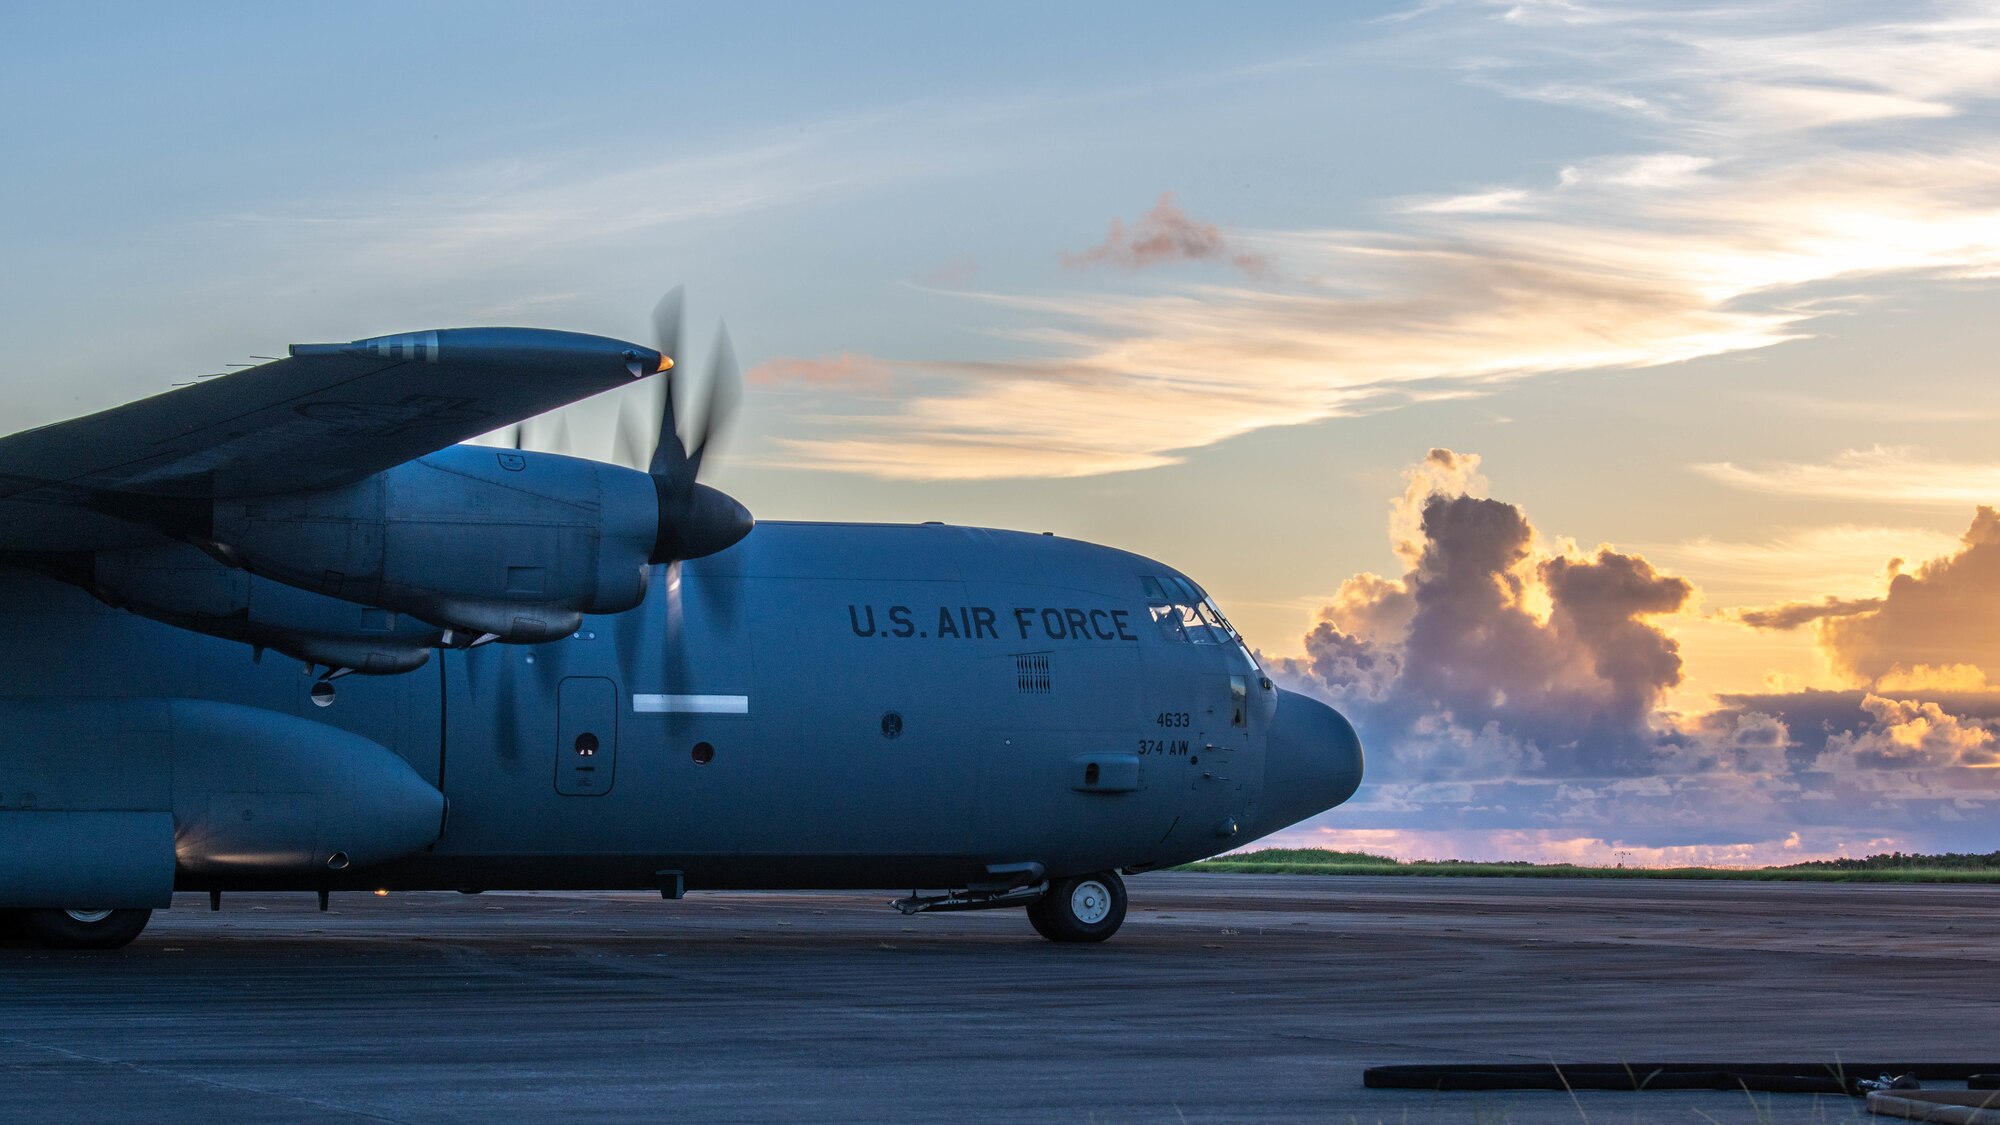 A C-130J Super Hercules sits on a flightline during sunset